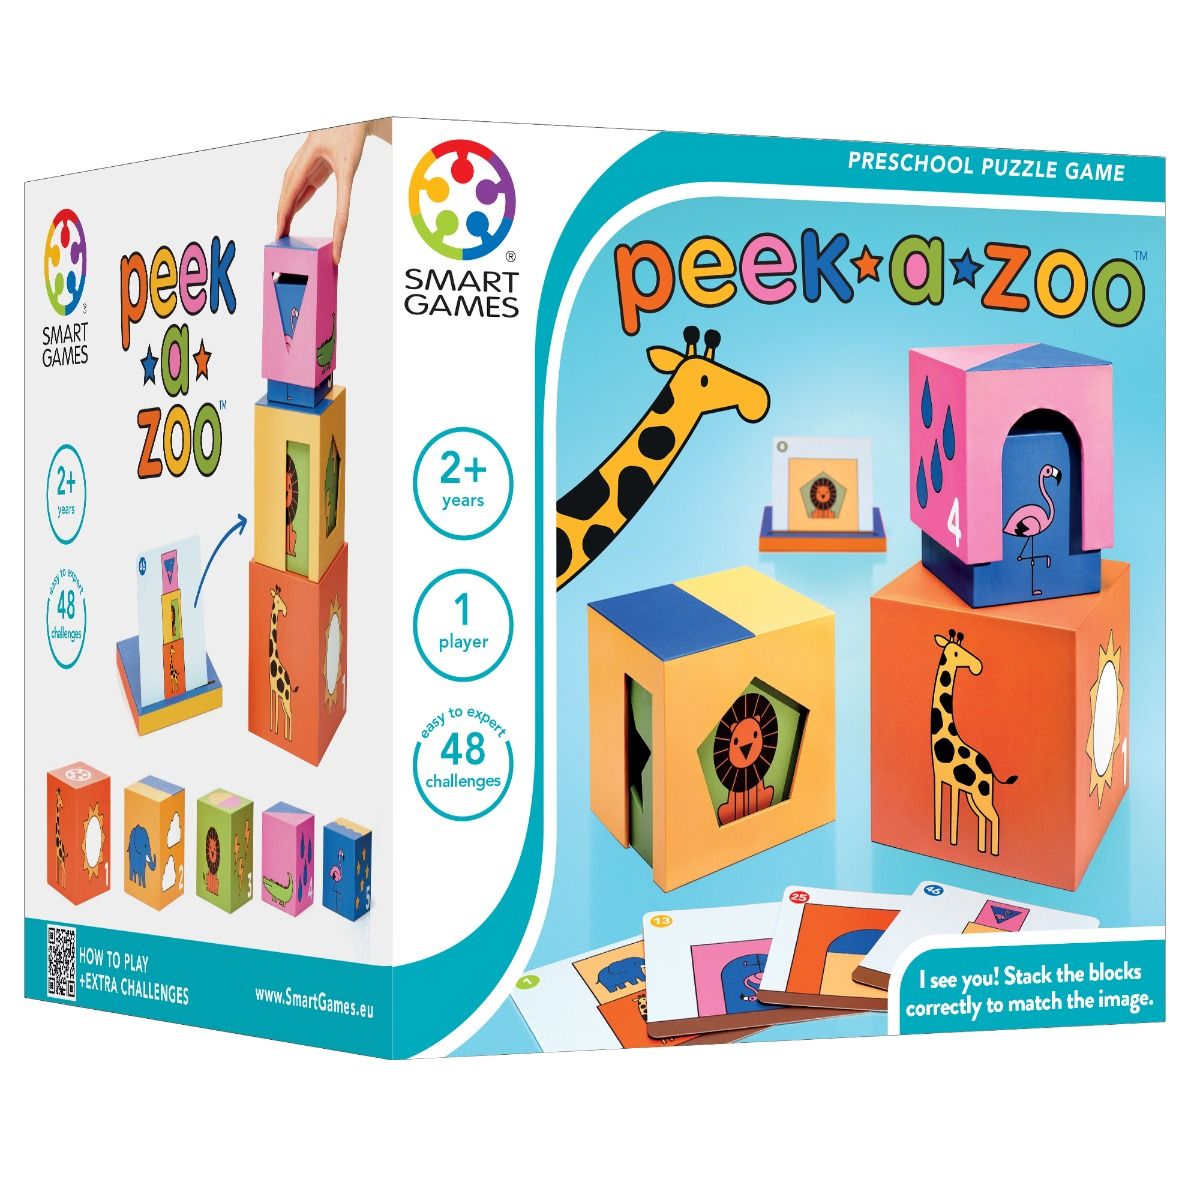 Peek -A -zoo Preschool Puzzle Game